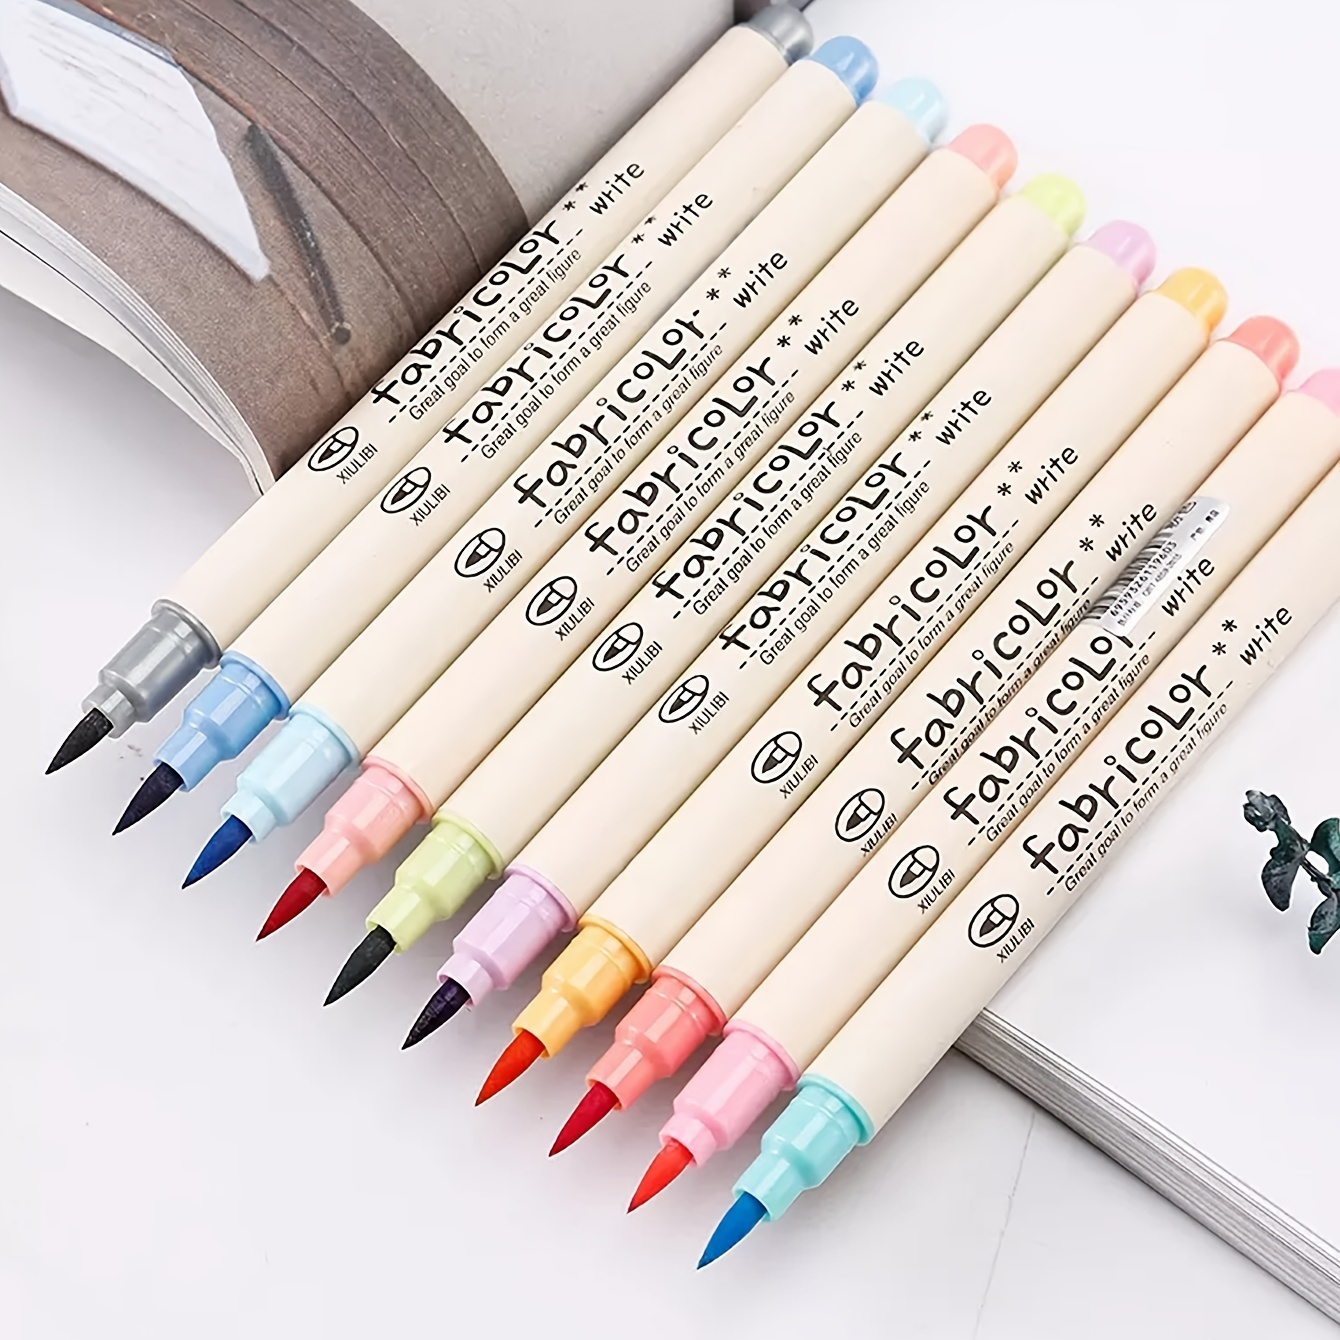 

10 Colors Brush Pen Set Pen Soft Tip Colour Brush Pen Calligraphy Art Stationery